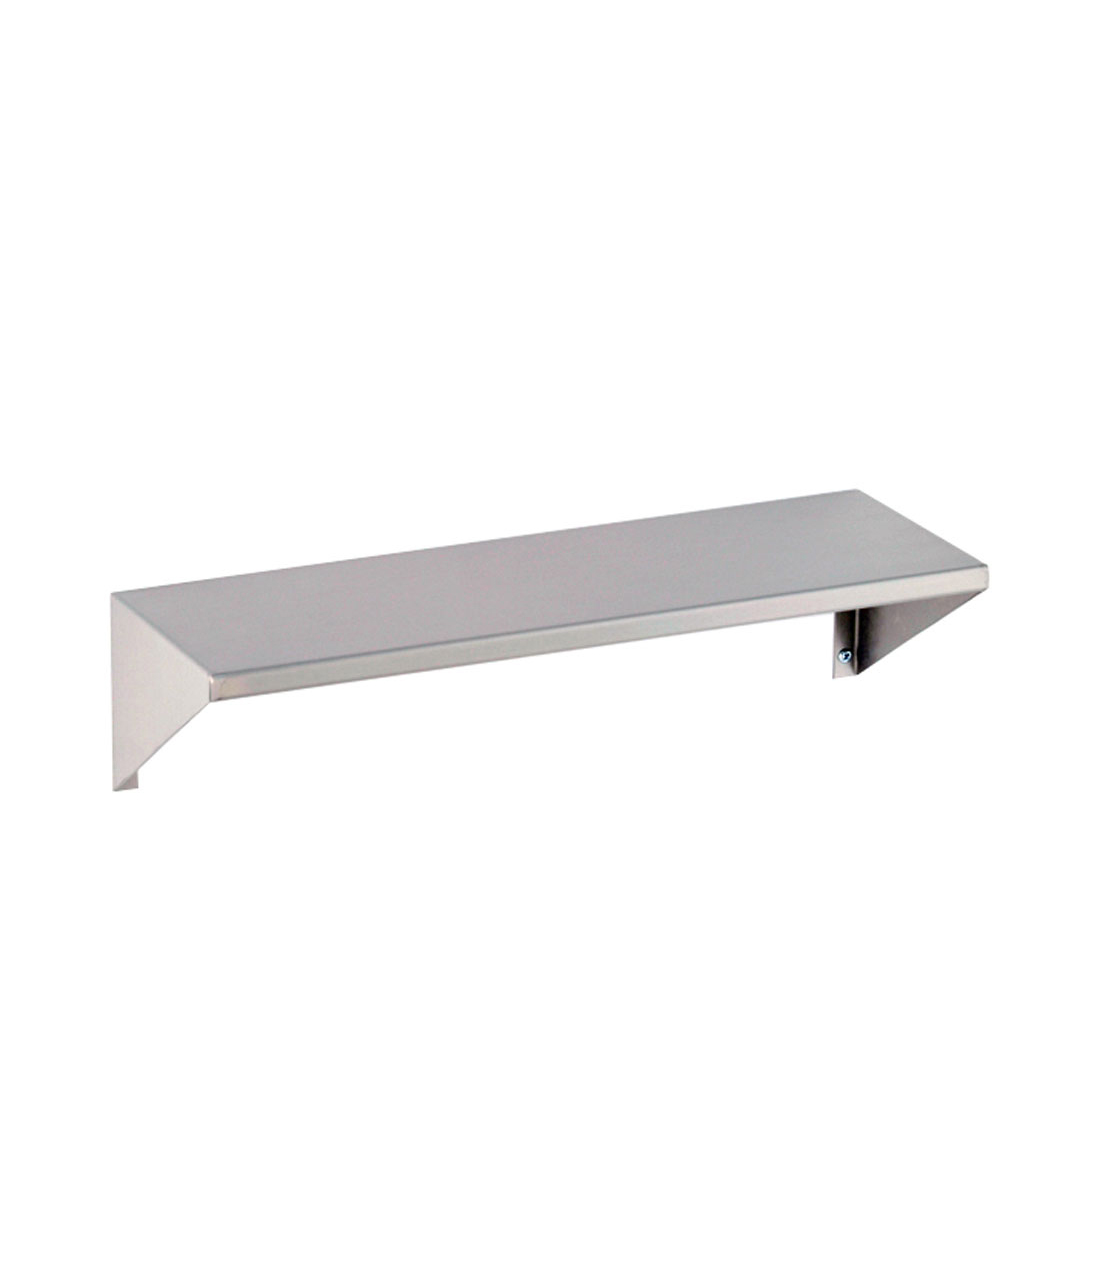 Stainless Steel Shelf - (Model #: s-6-series) main image